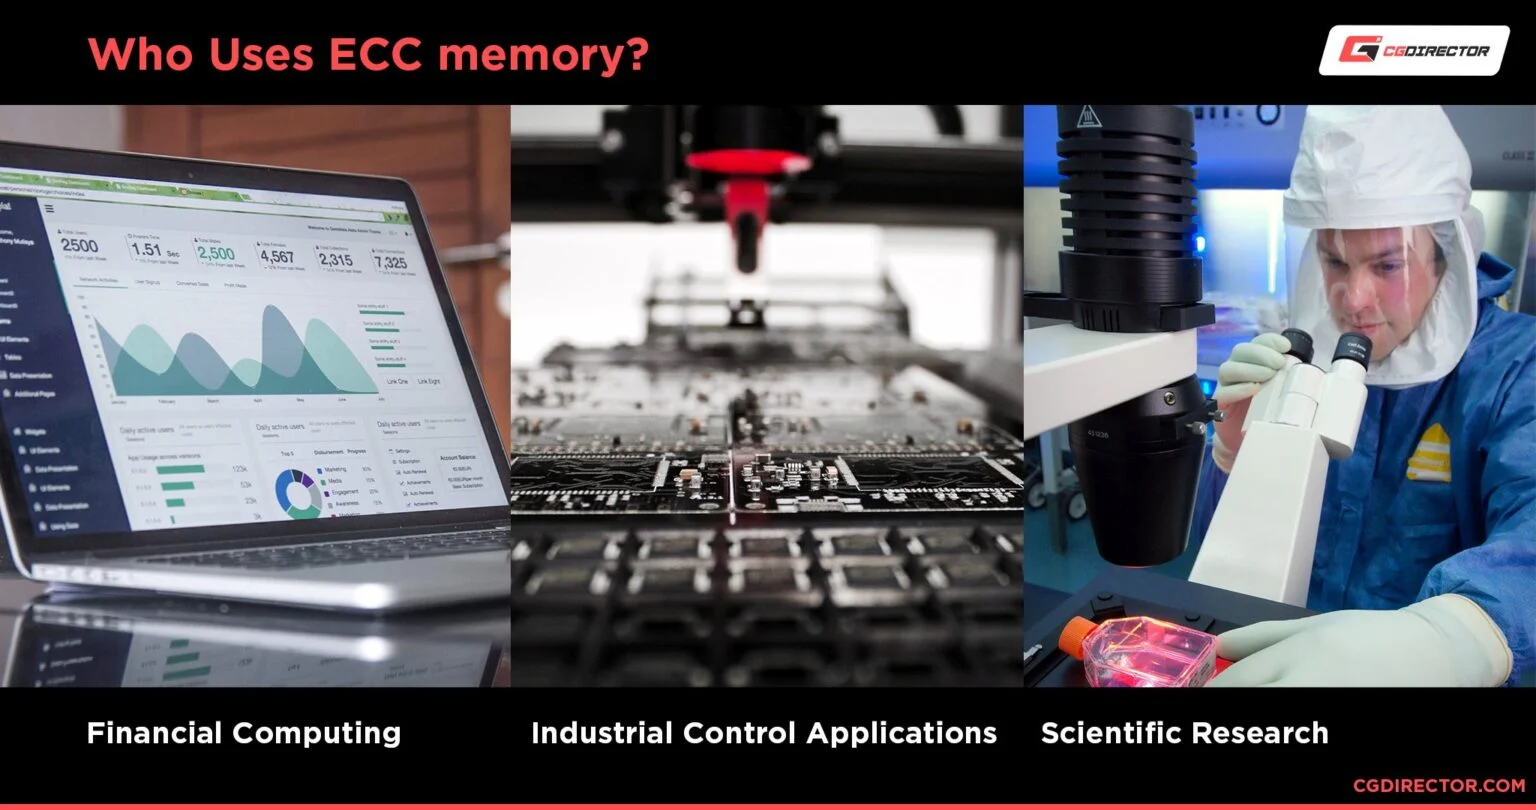 Who uses ECC memory